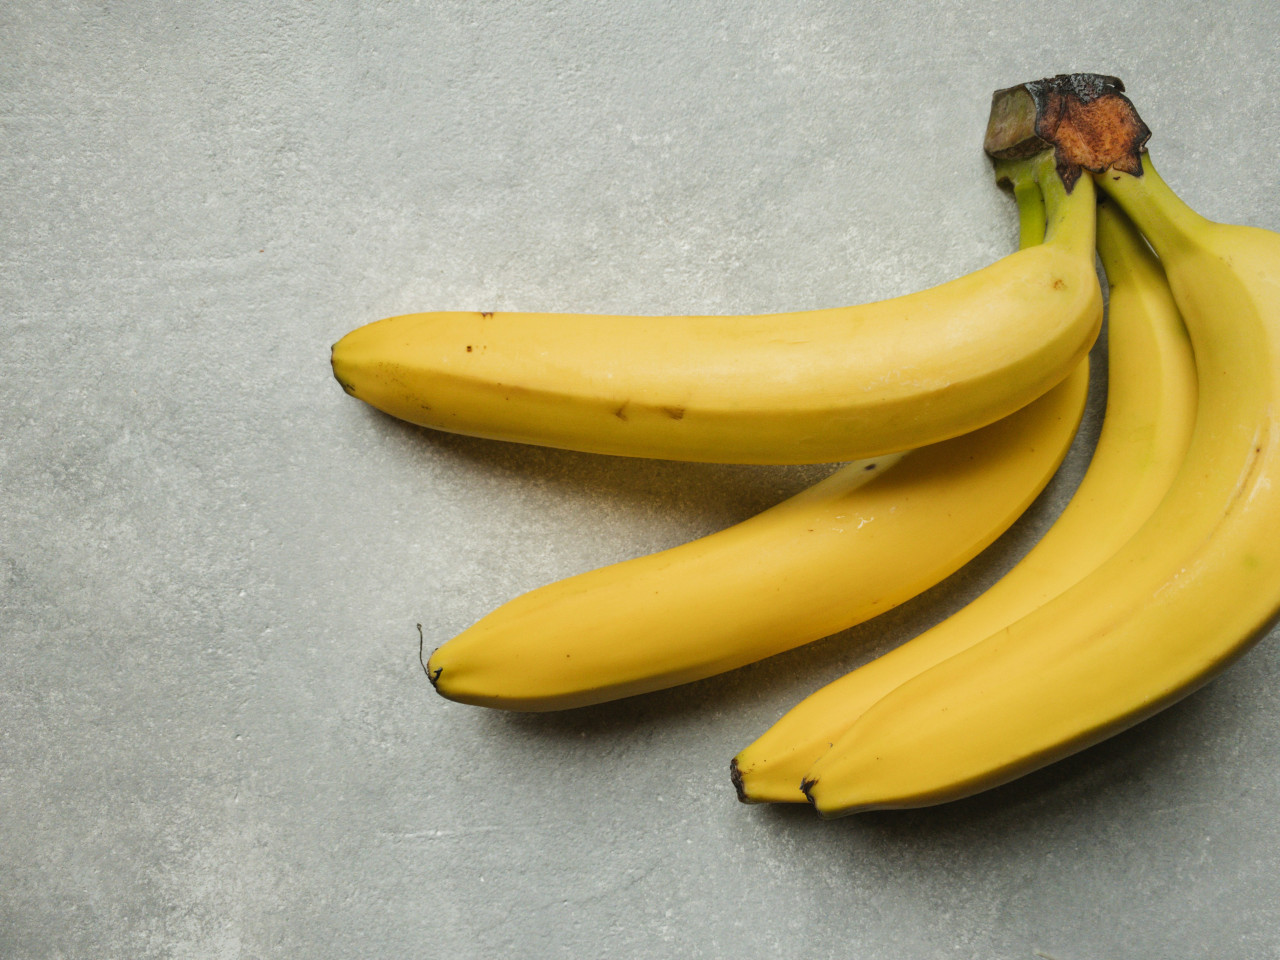 Bananas. Foto: Unsplash.